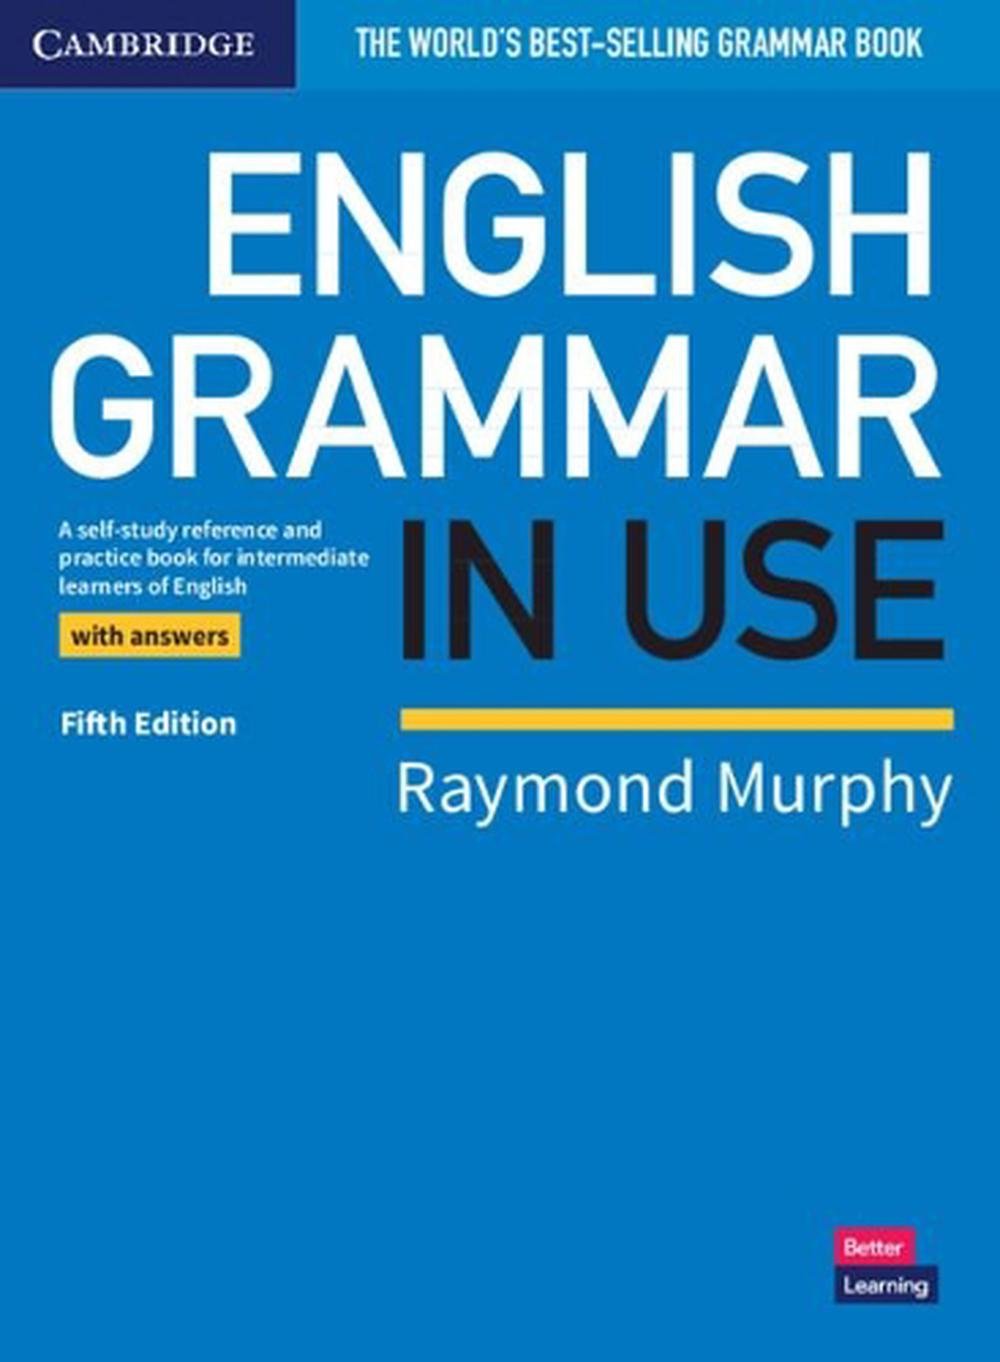 essential english grammar in use download